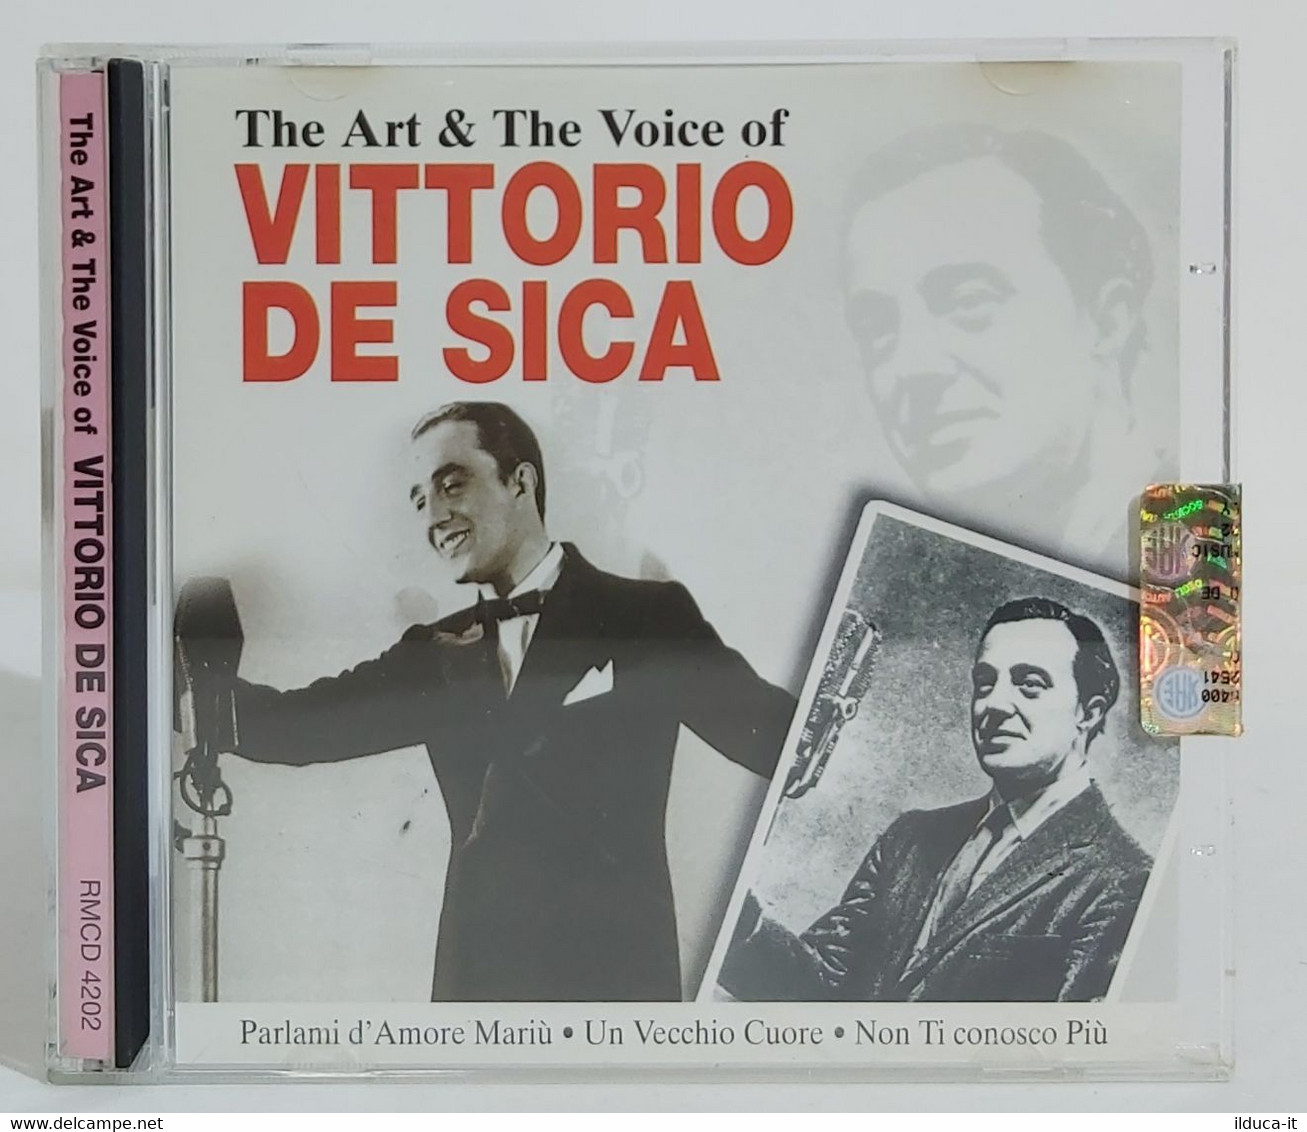 I102304 CD - The Art & The Voice Of Vittorio De Sica - Replay Music - Andere - Italiaans